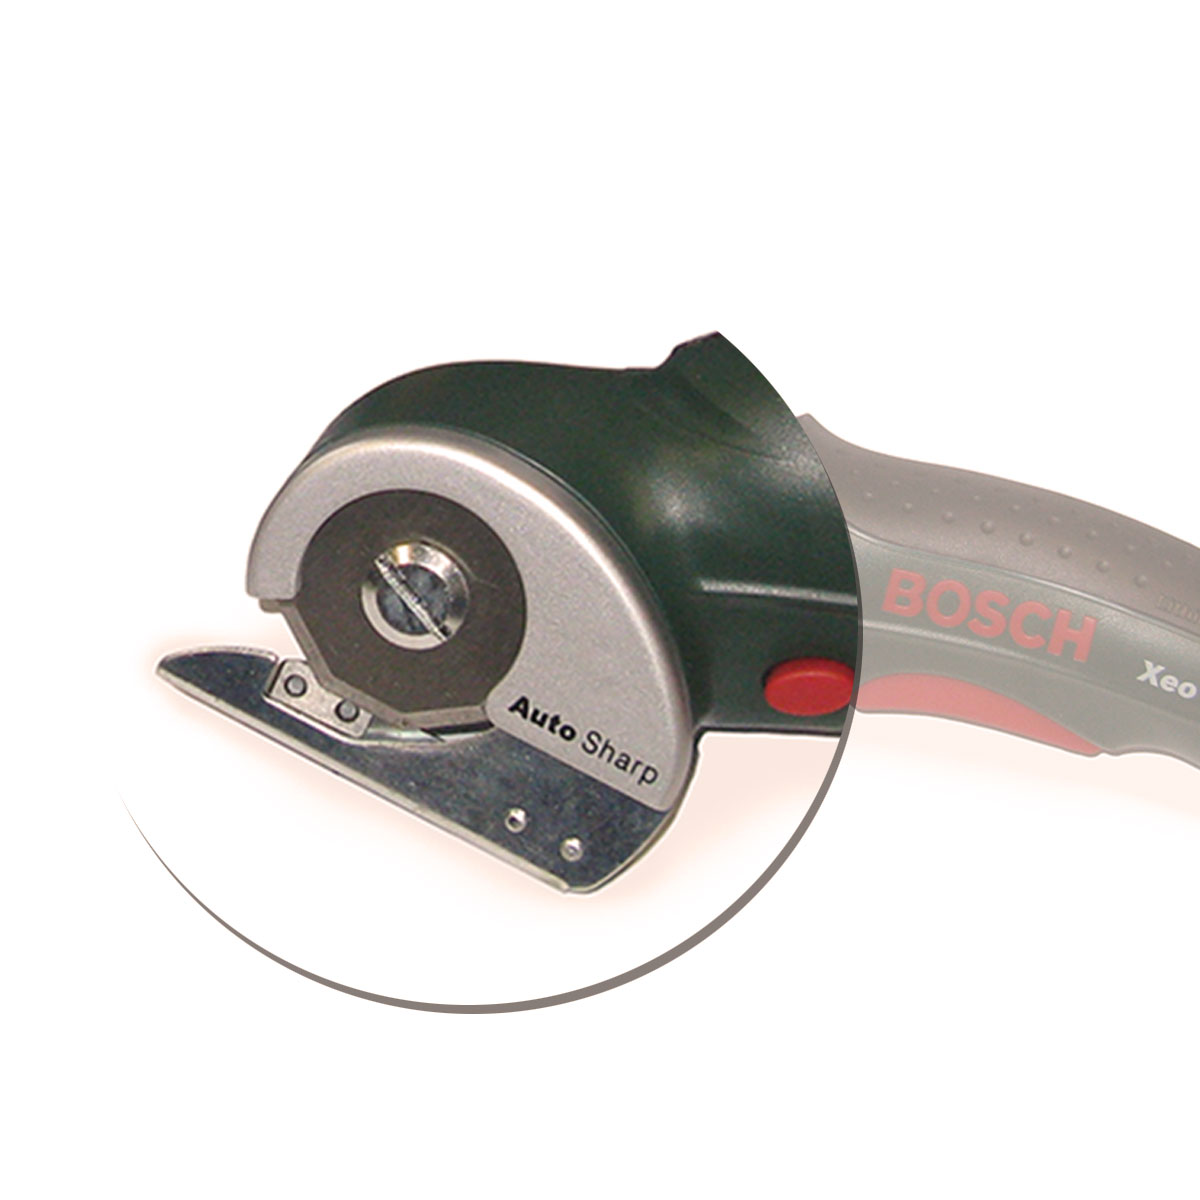 blade for battery foil cutter